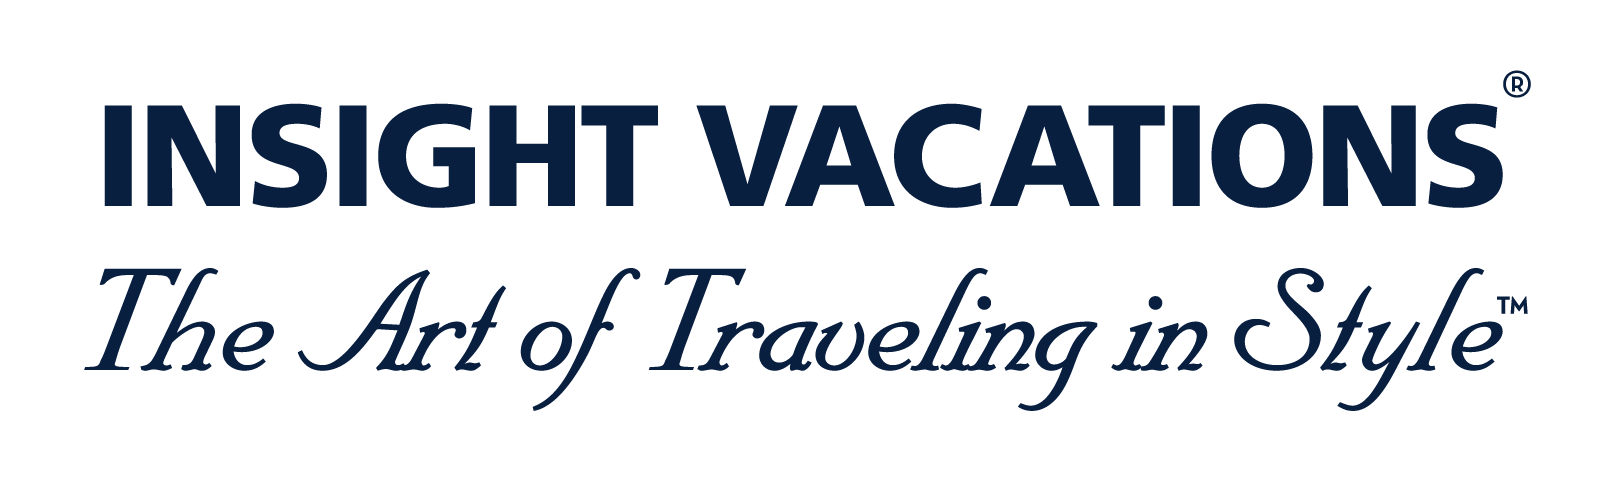 Insight Vacations